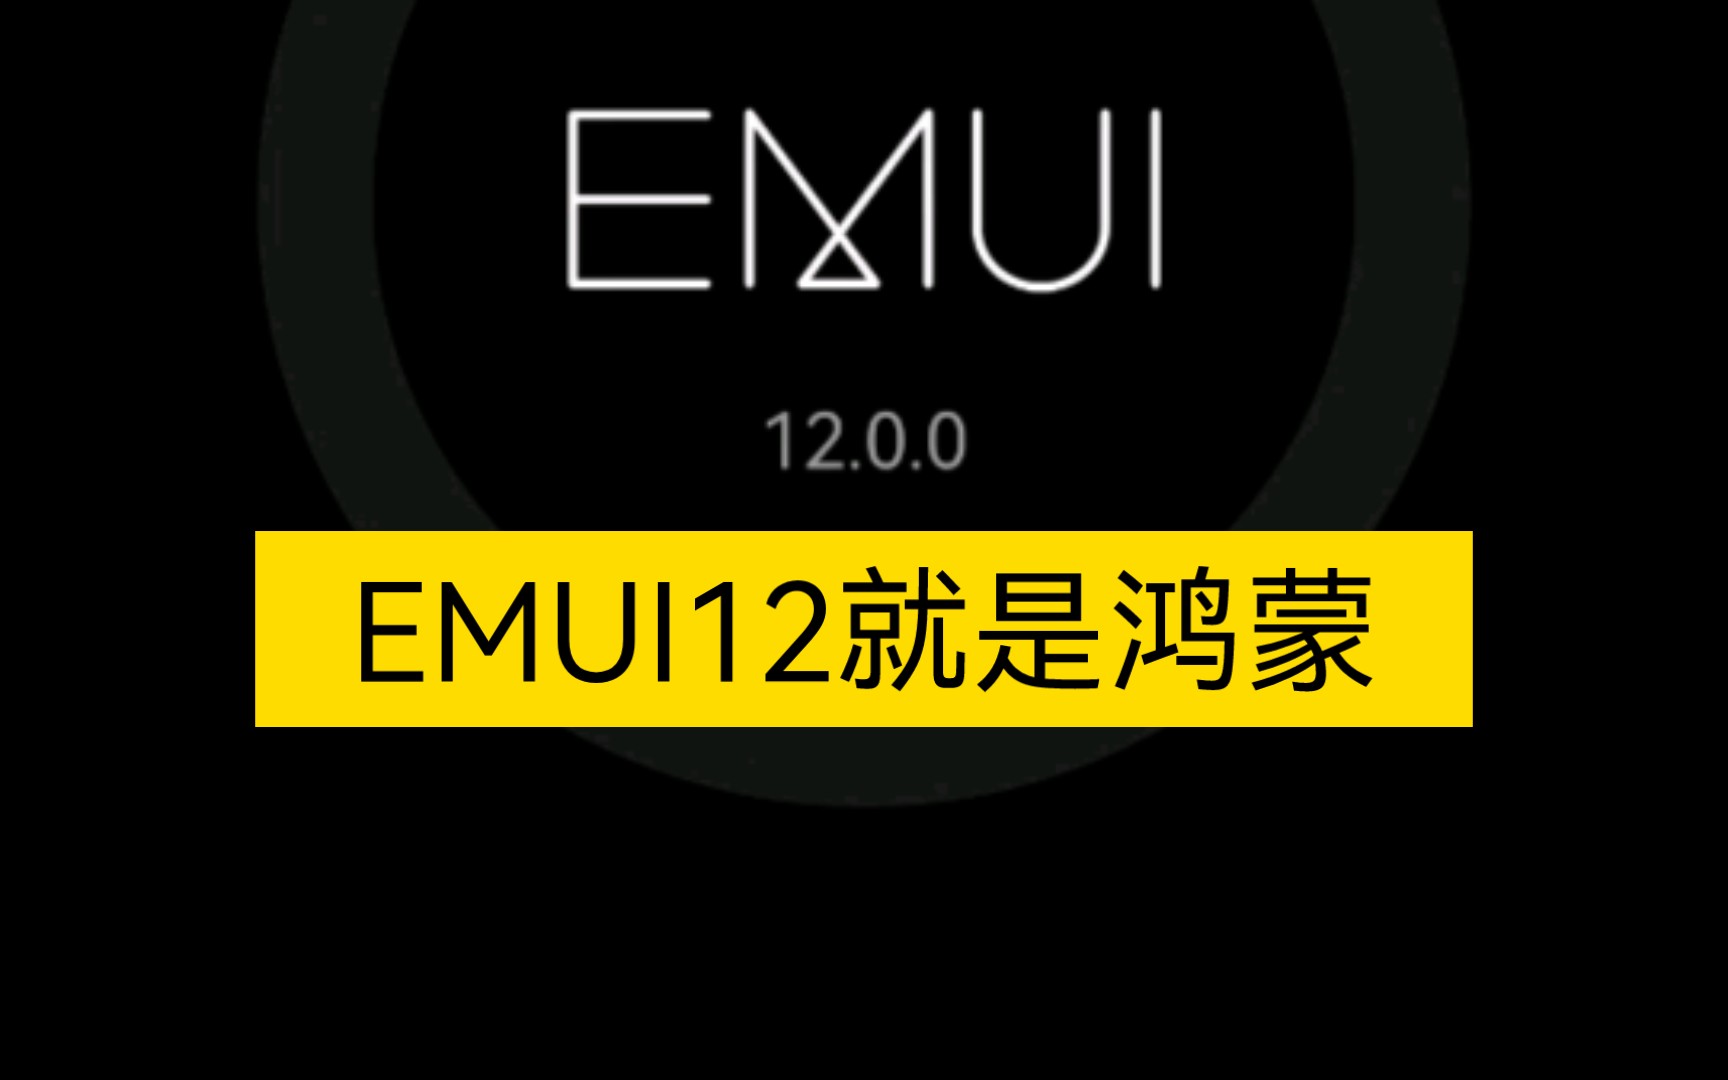 Android 系统大揭秘：小米 MIUI 功能丰富却臃肿，华为 EMUI 稳字当头  第5张